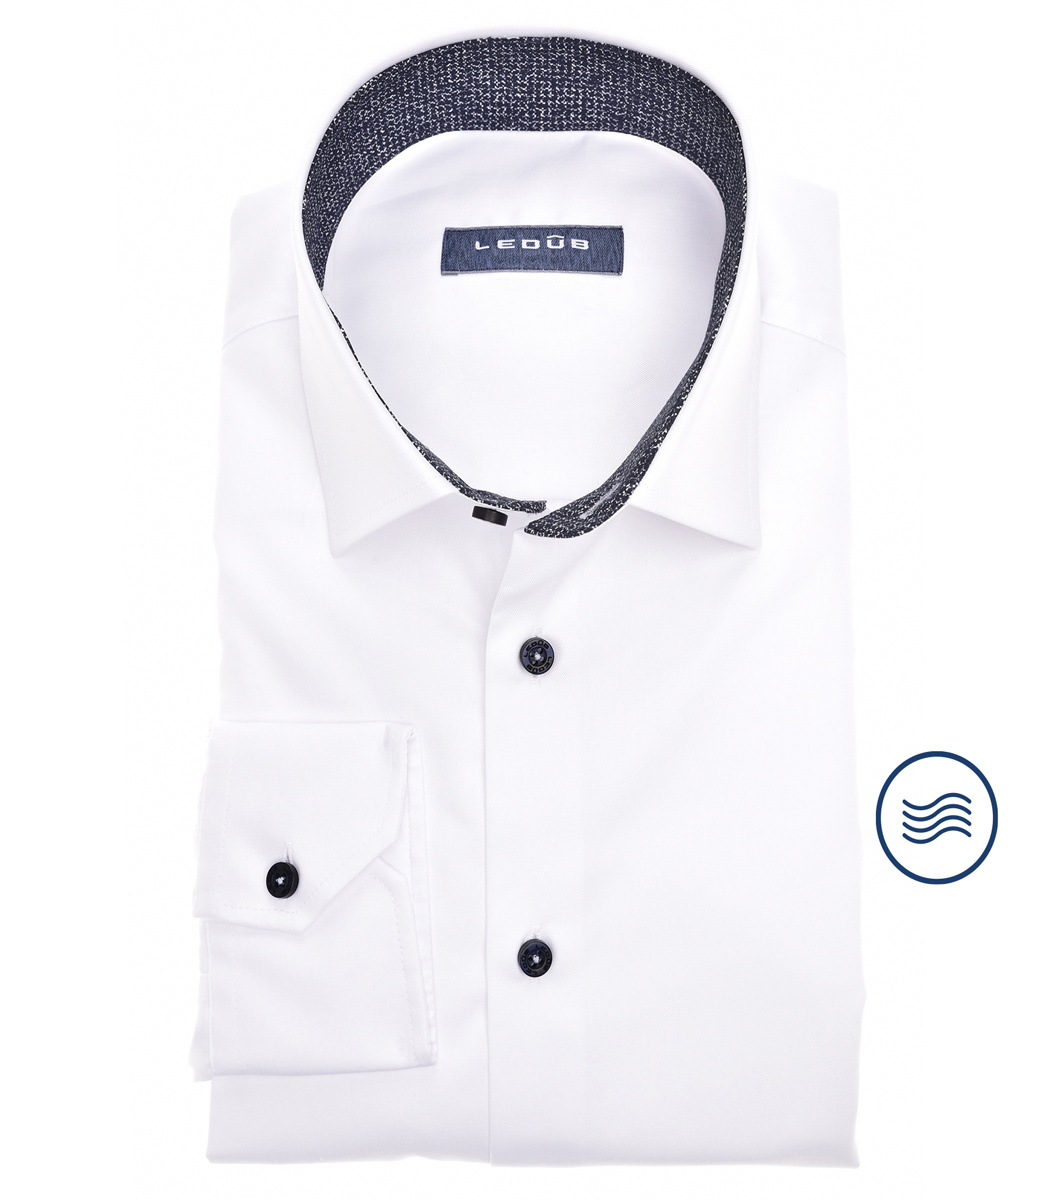 commentator domein Wakker worden 0141686 Ledub overhemd modern fit wit lange mouw donkerblauwe knopen -  Shirtsupplier.nl